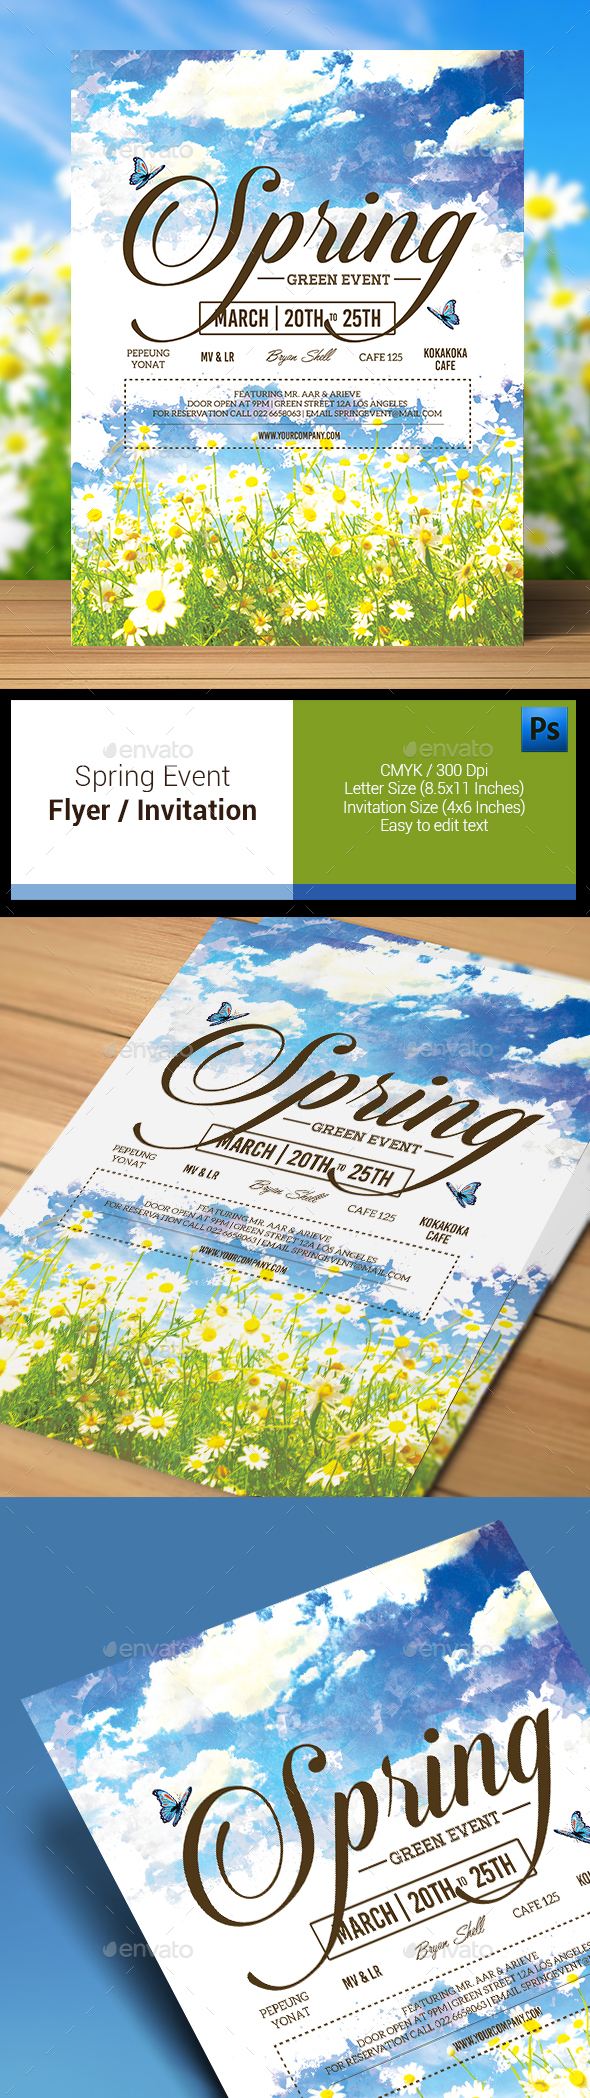 Spring Event Flyer / Invitation